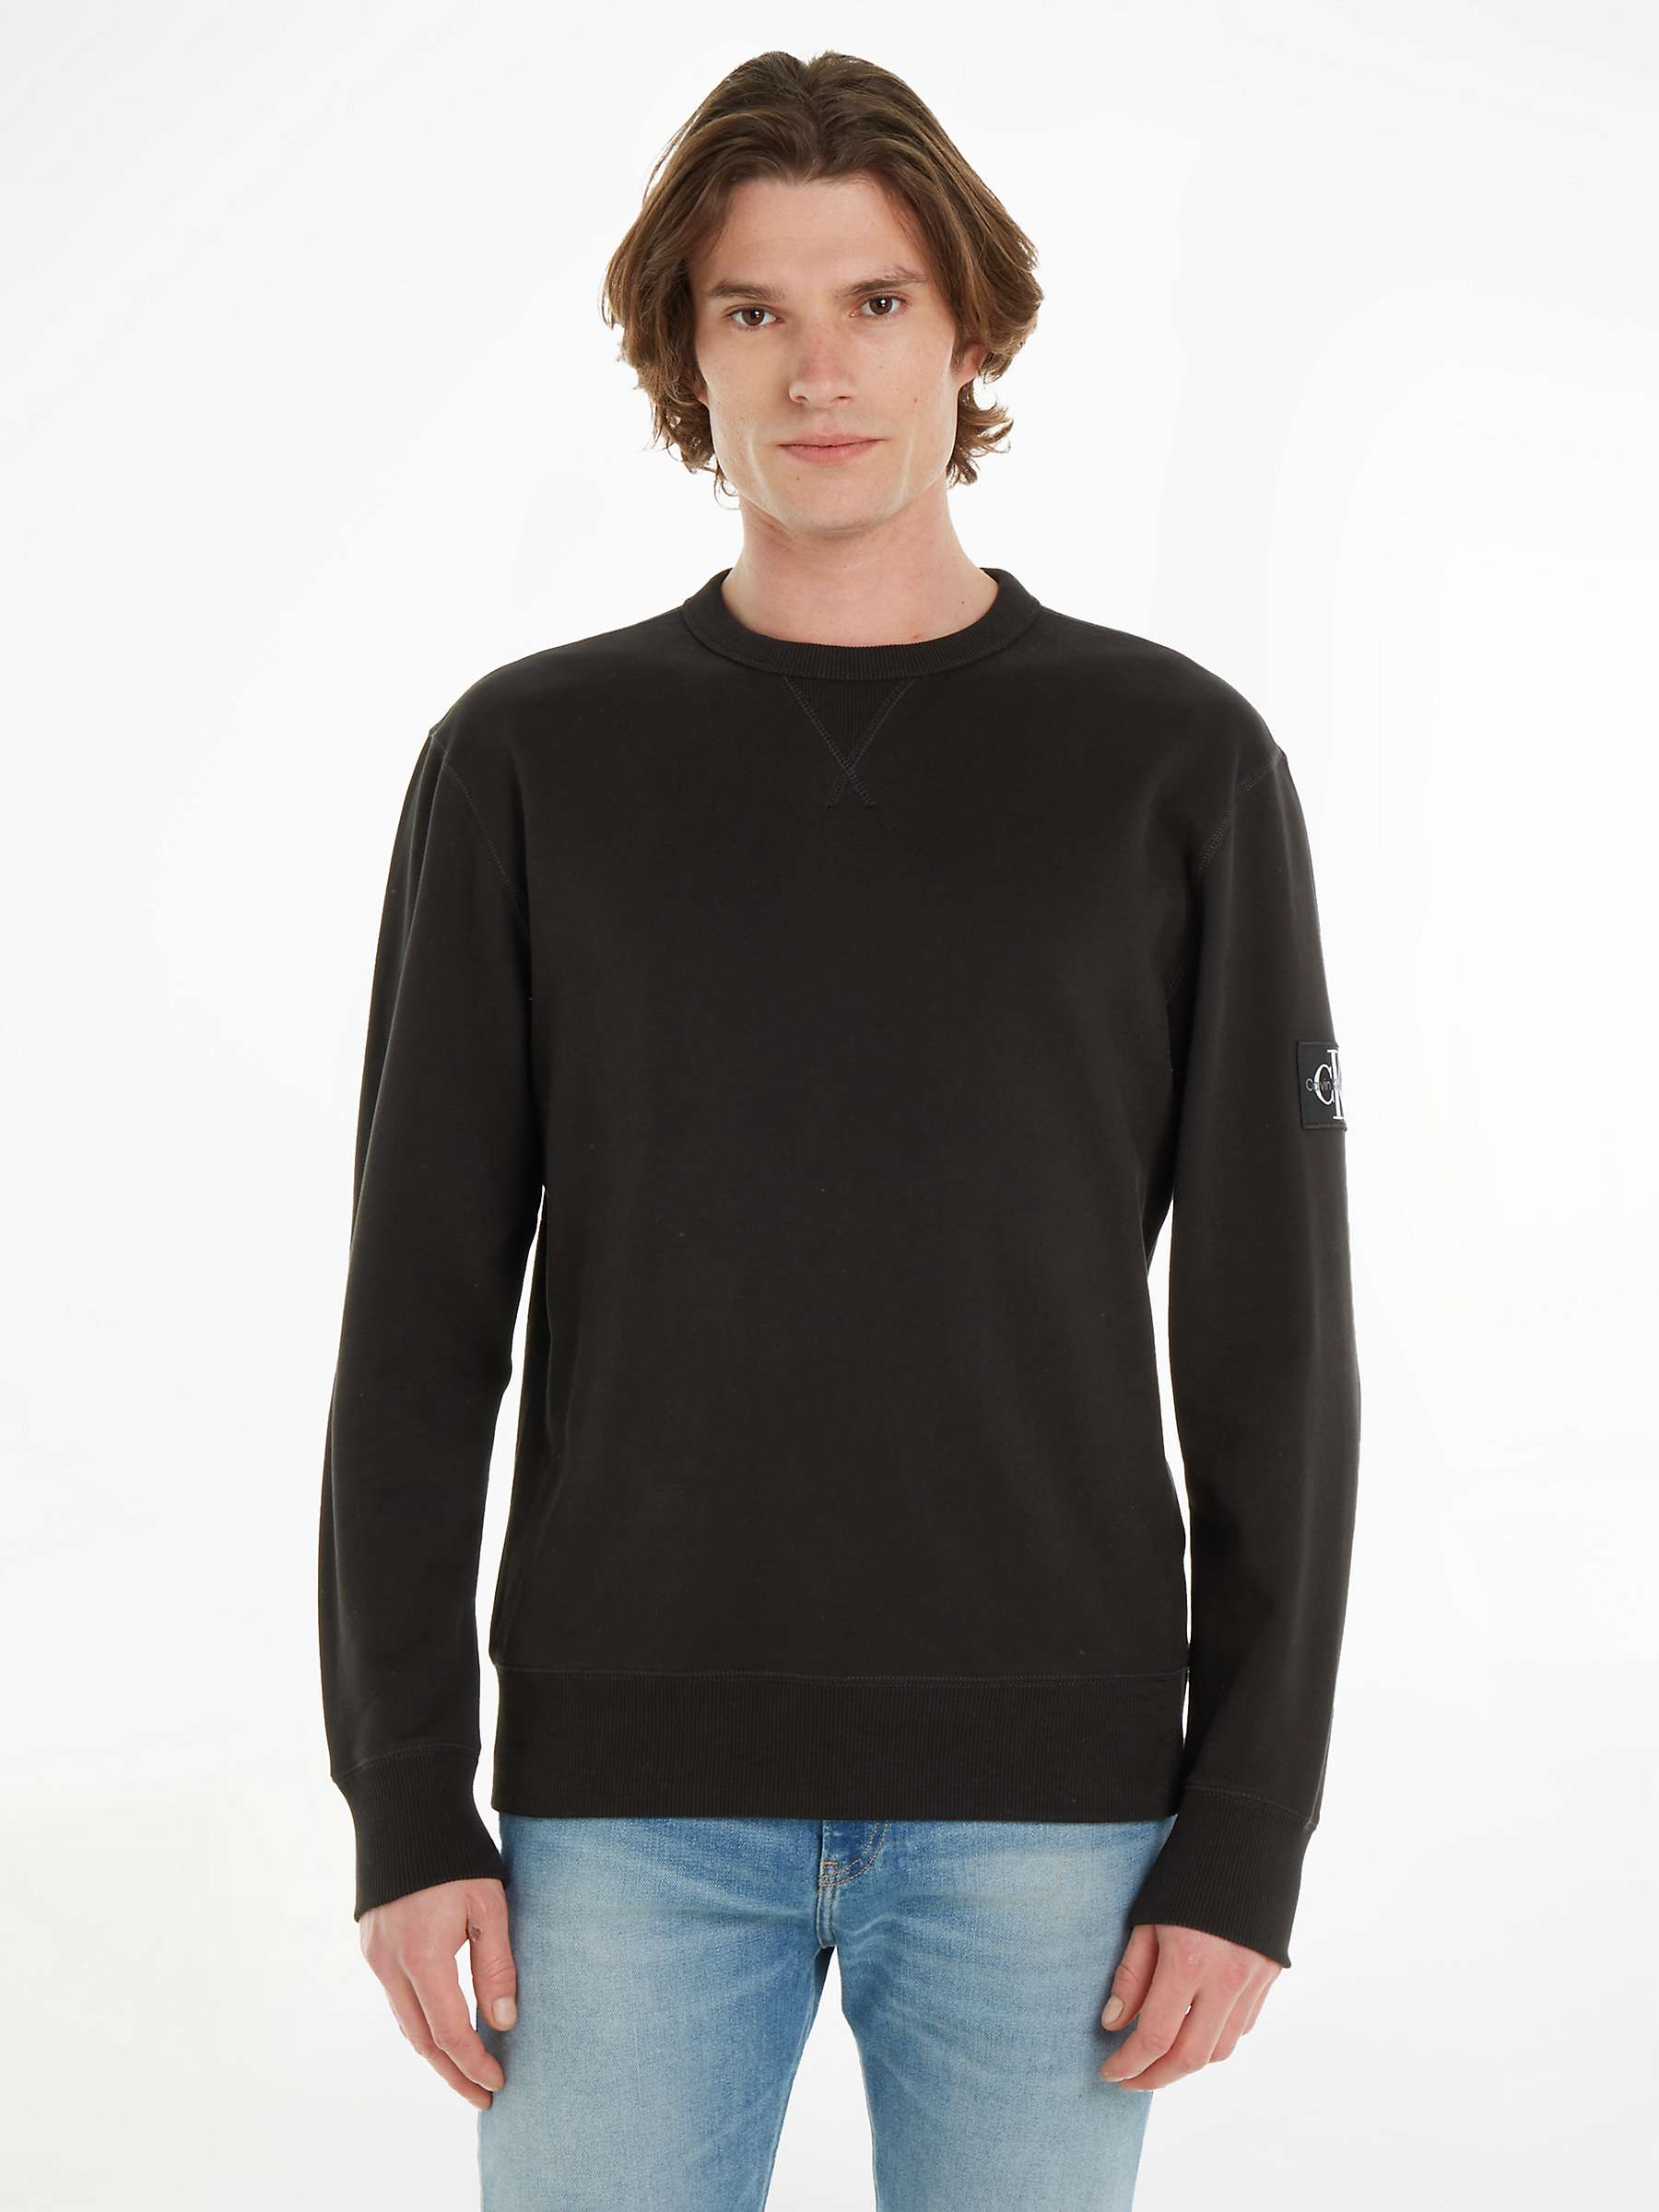 Buy Calvin Klein Monologo Sweatshirt, Black Online at johnlewis.com